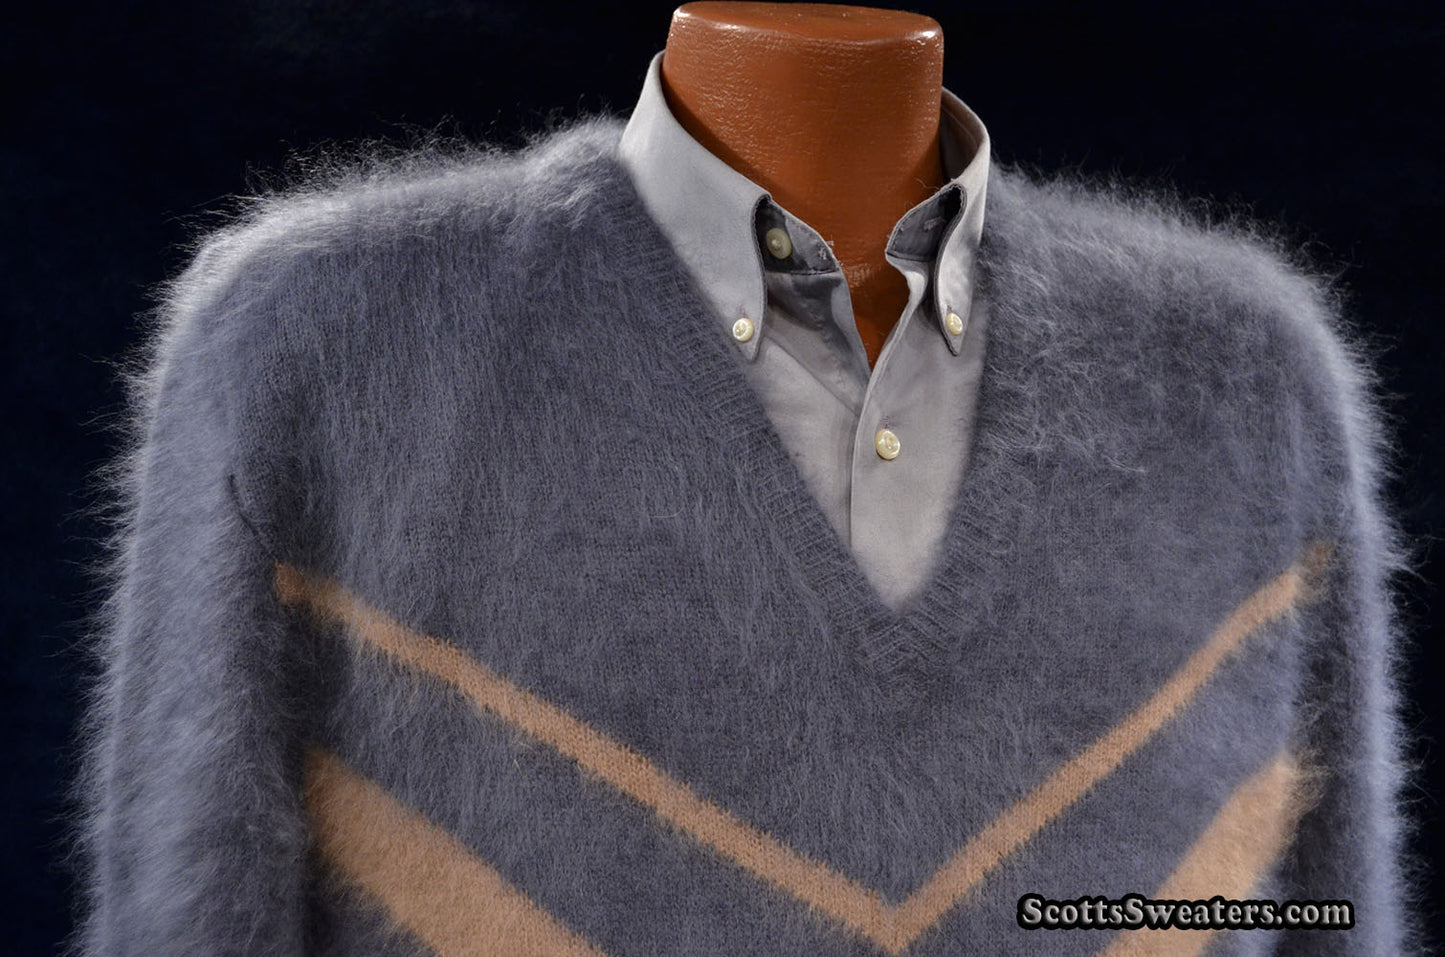 615-014 Men's Ultra-Soft Angora Sweater